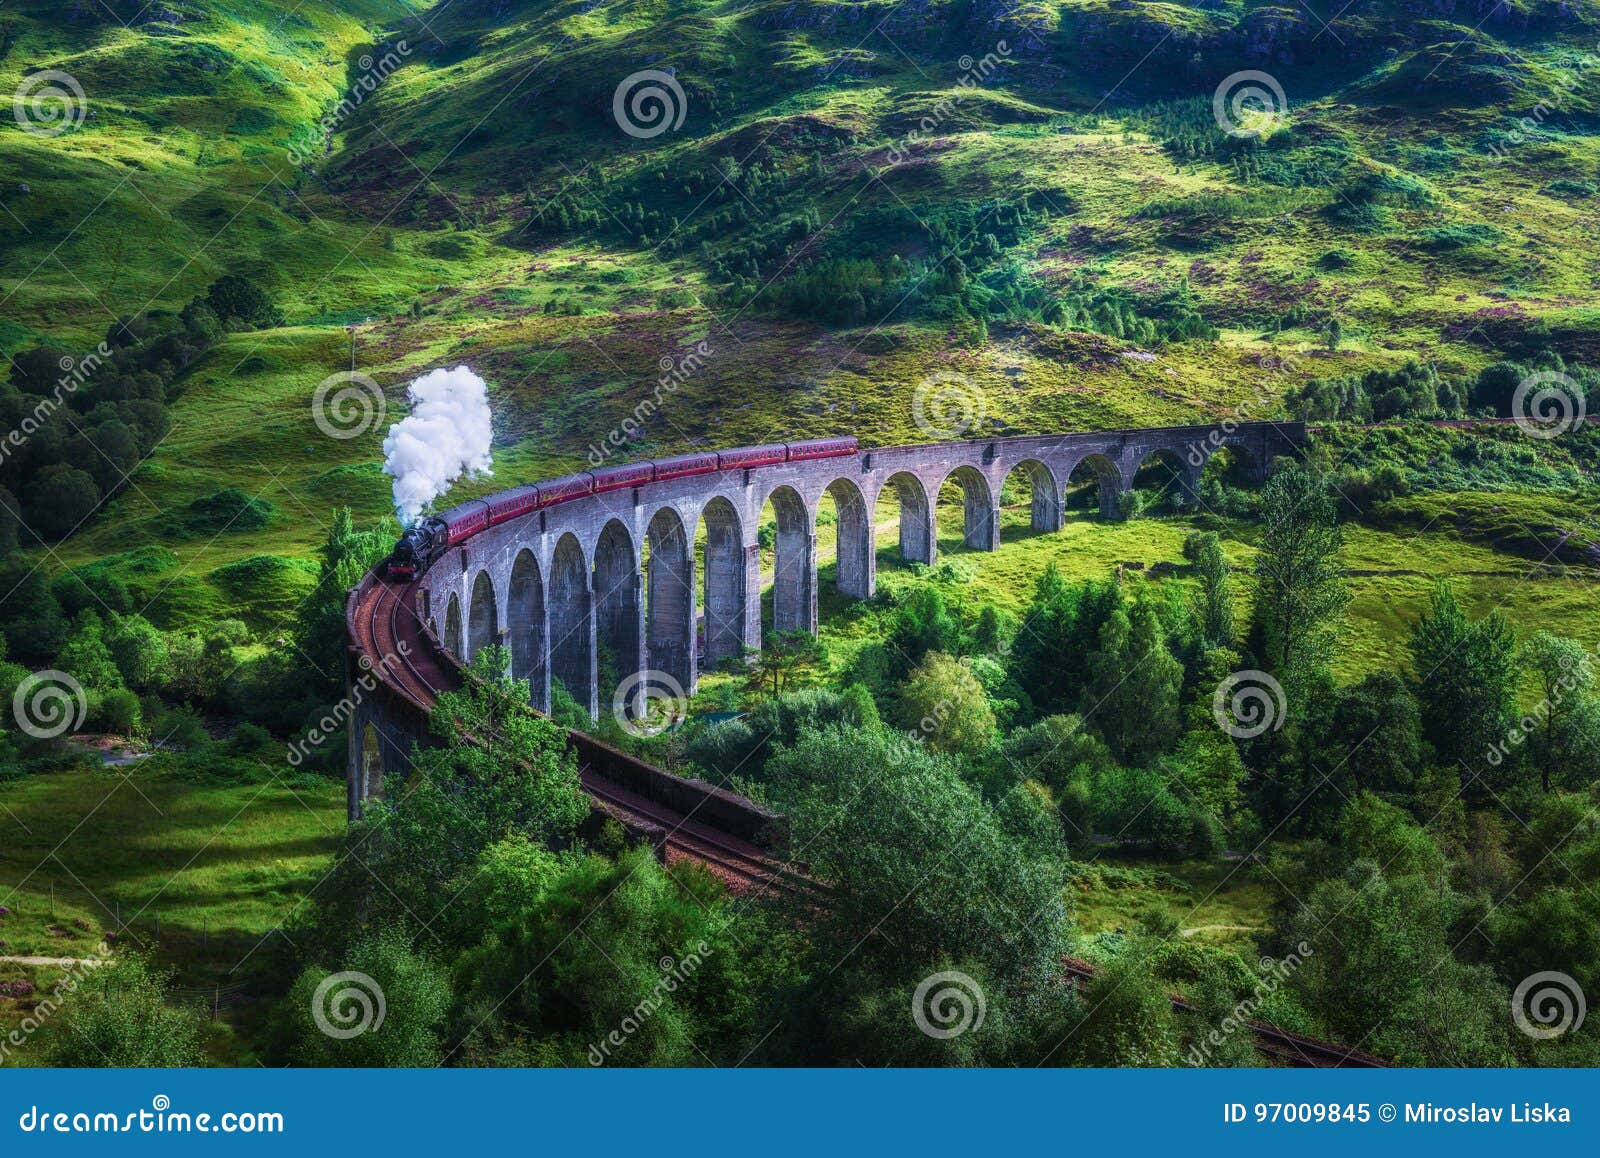 glenfinnan railway viaduct in scotland with a steam train